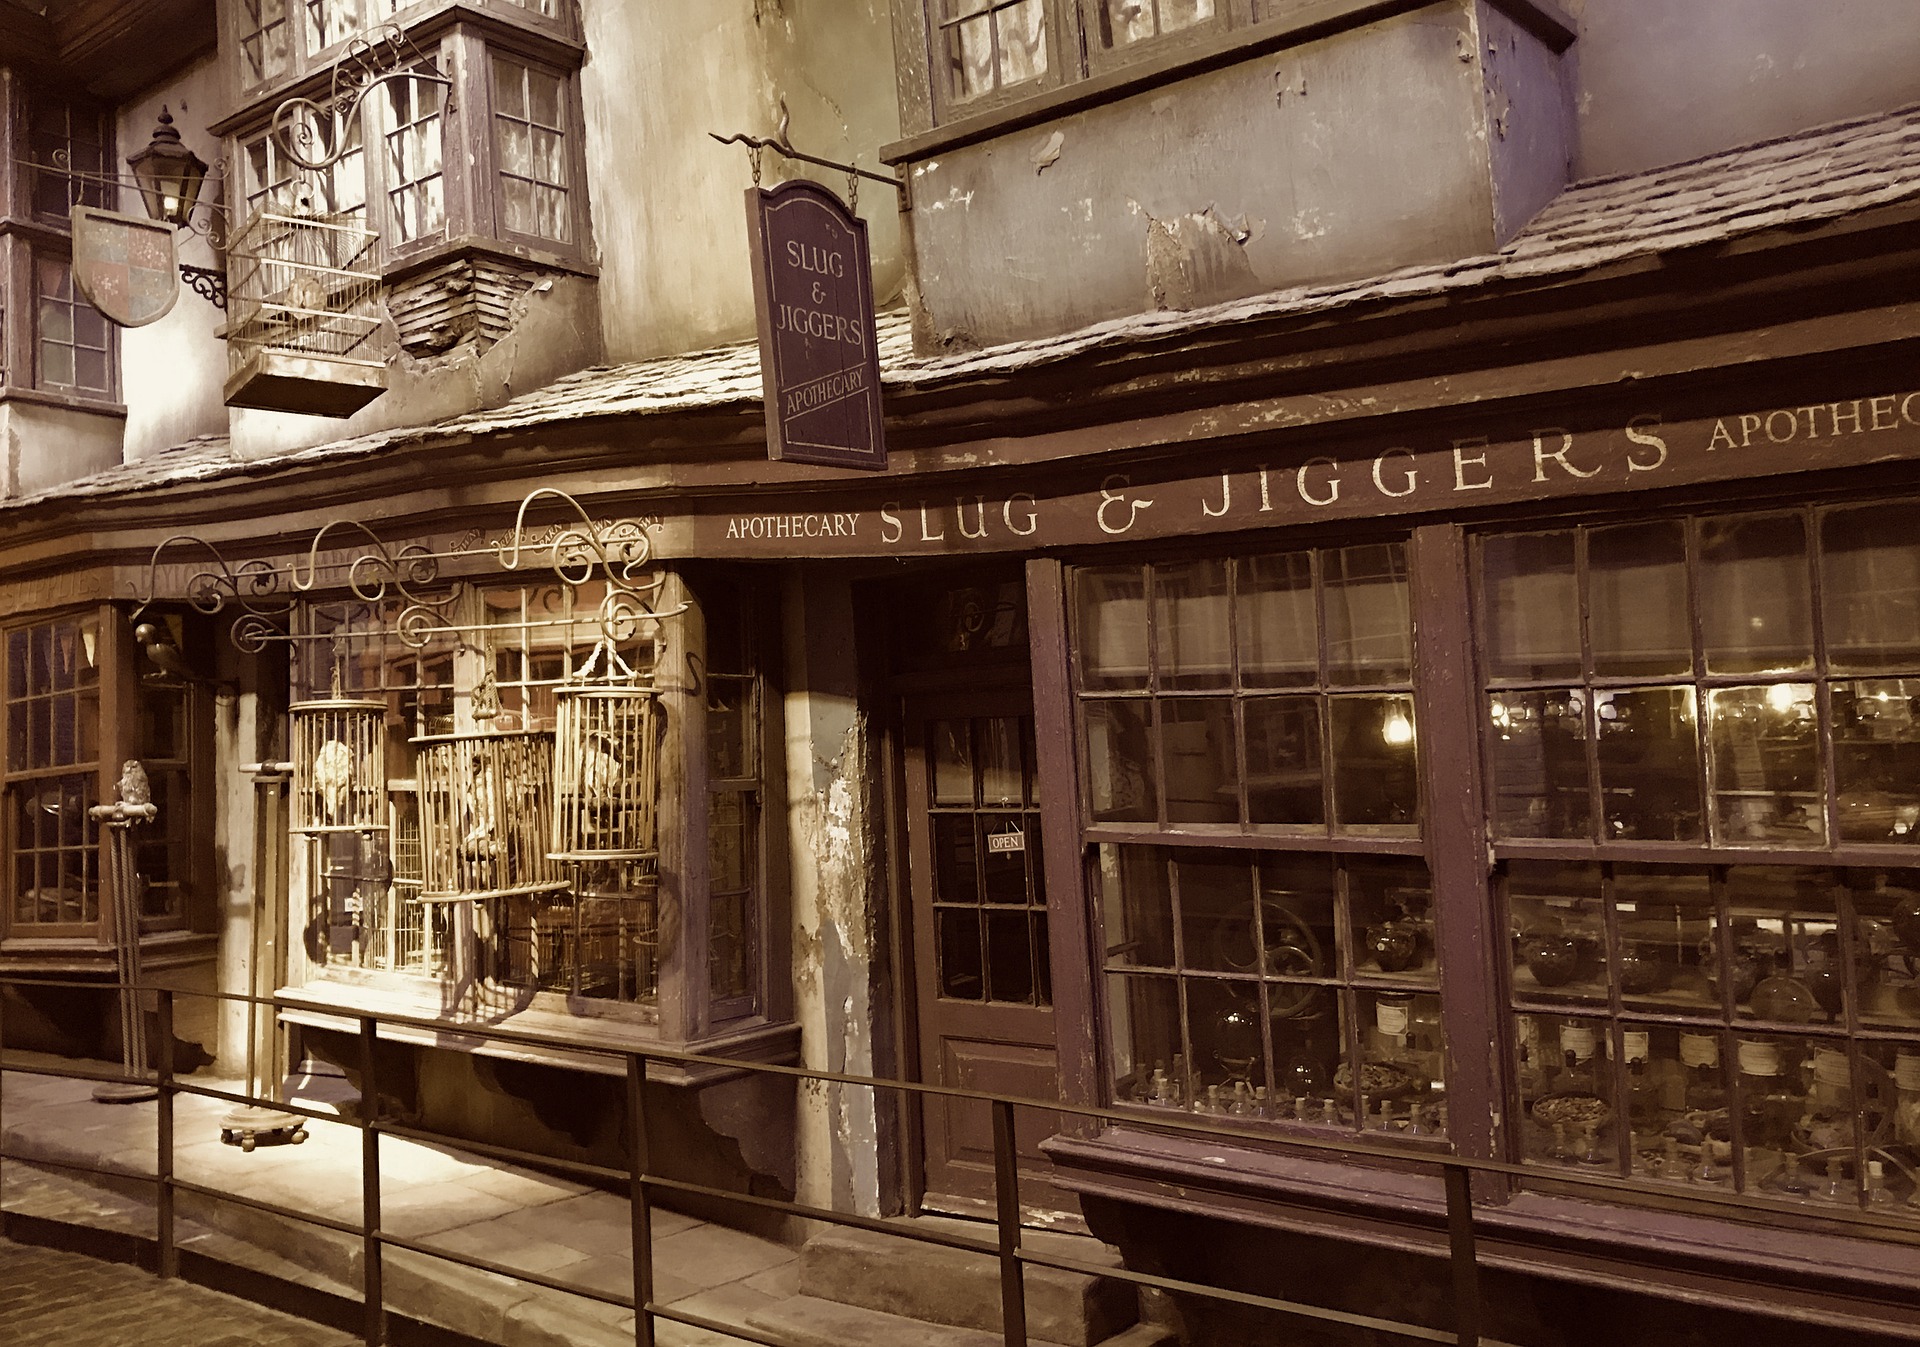 Harry Potter Diagon Alley